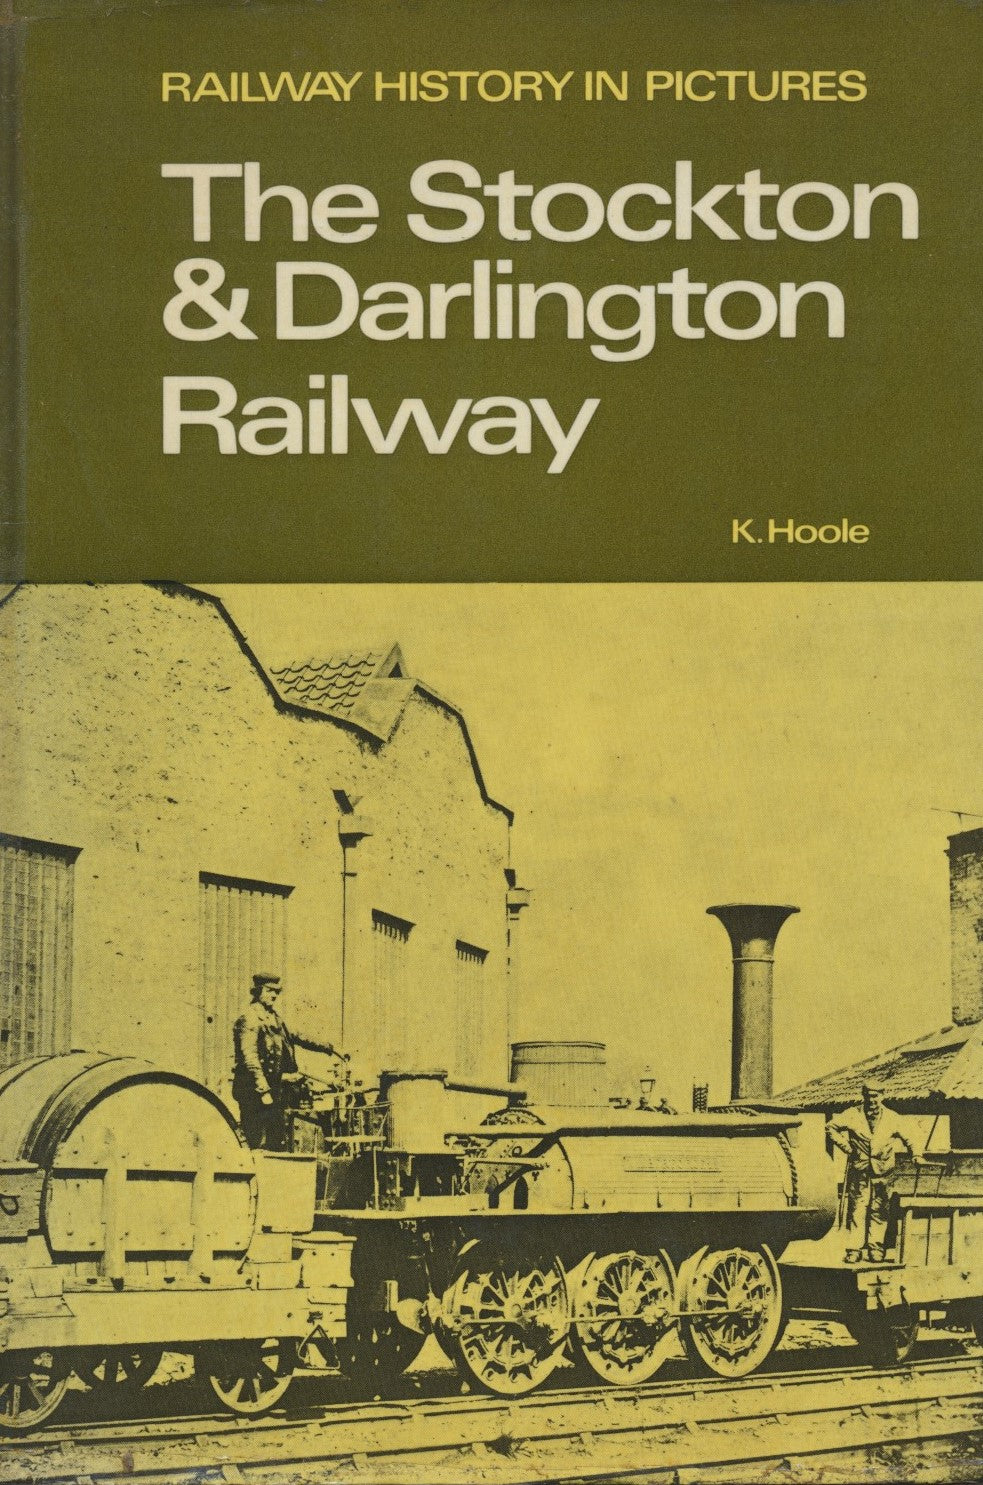 The Stockton & Darlington Railway